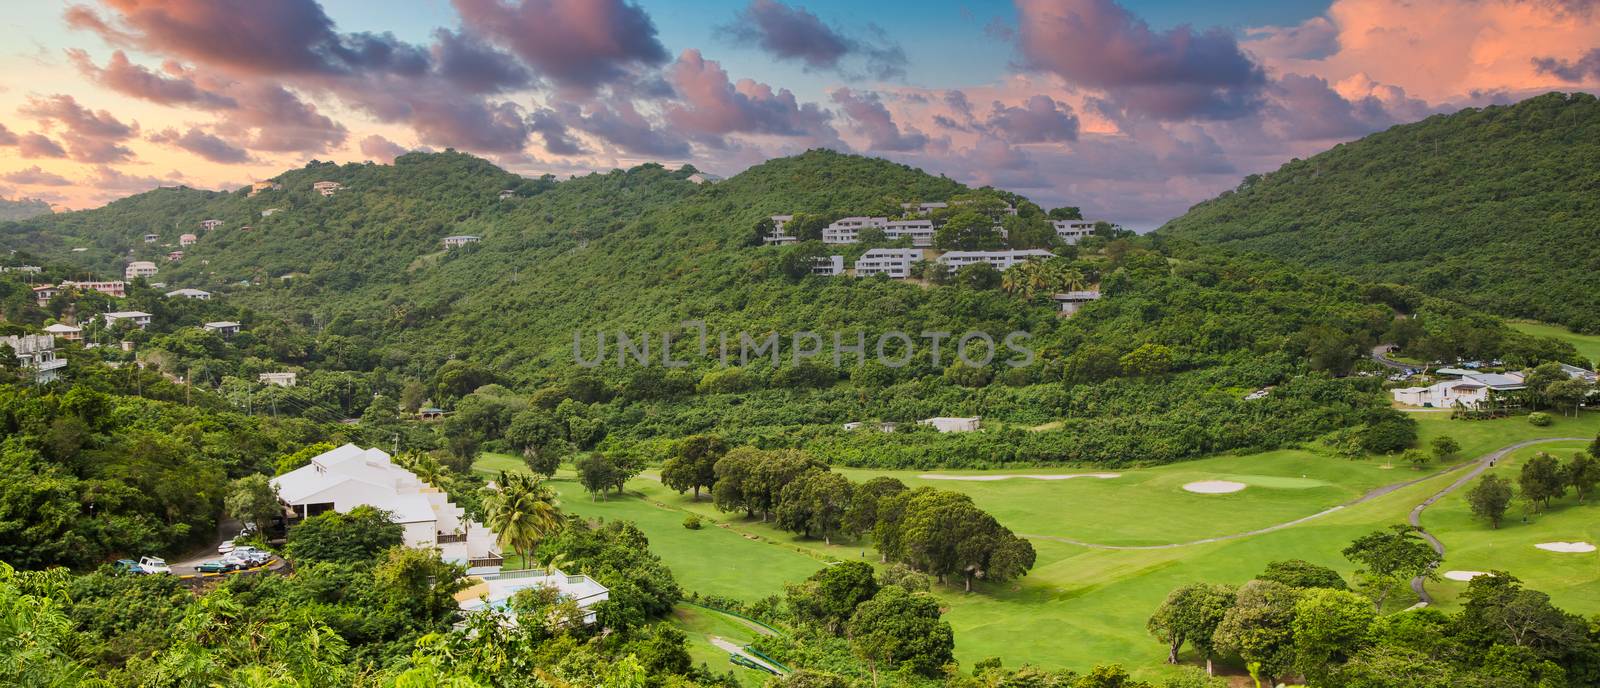 A golf course on the Caribbean island of St Thomas